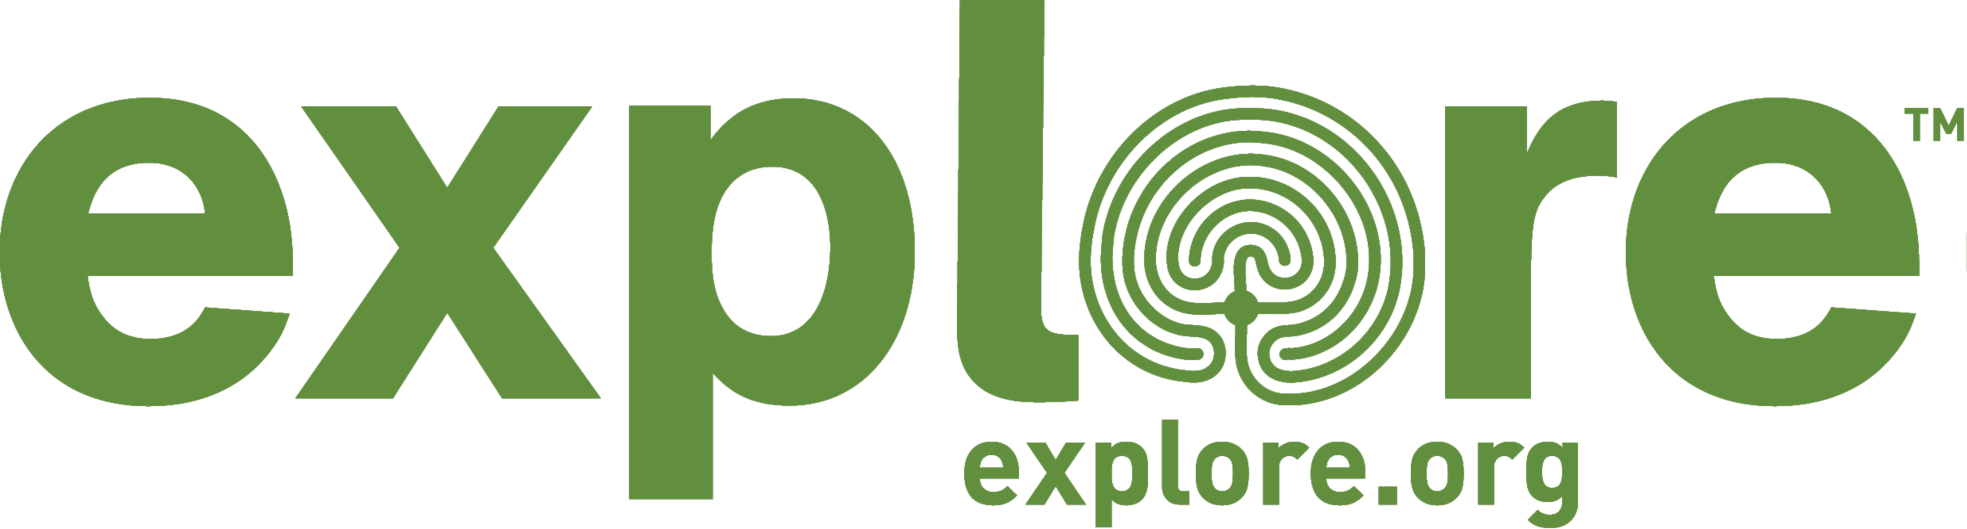 Explore.org Logo